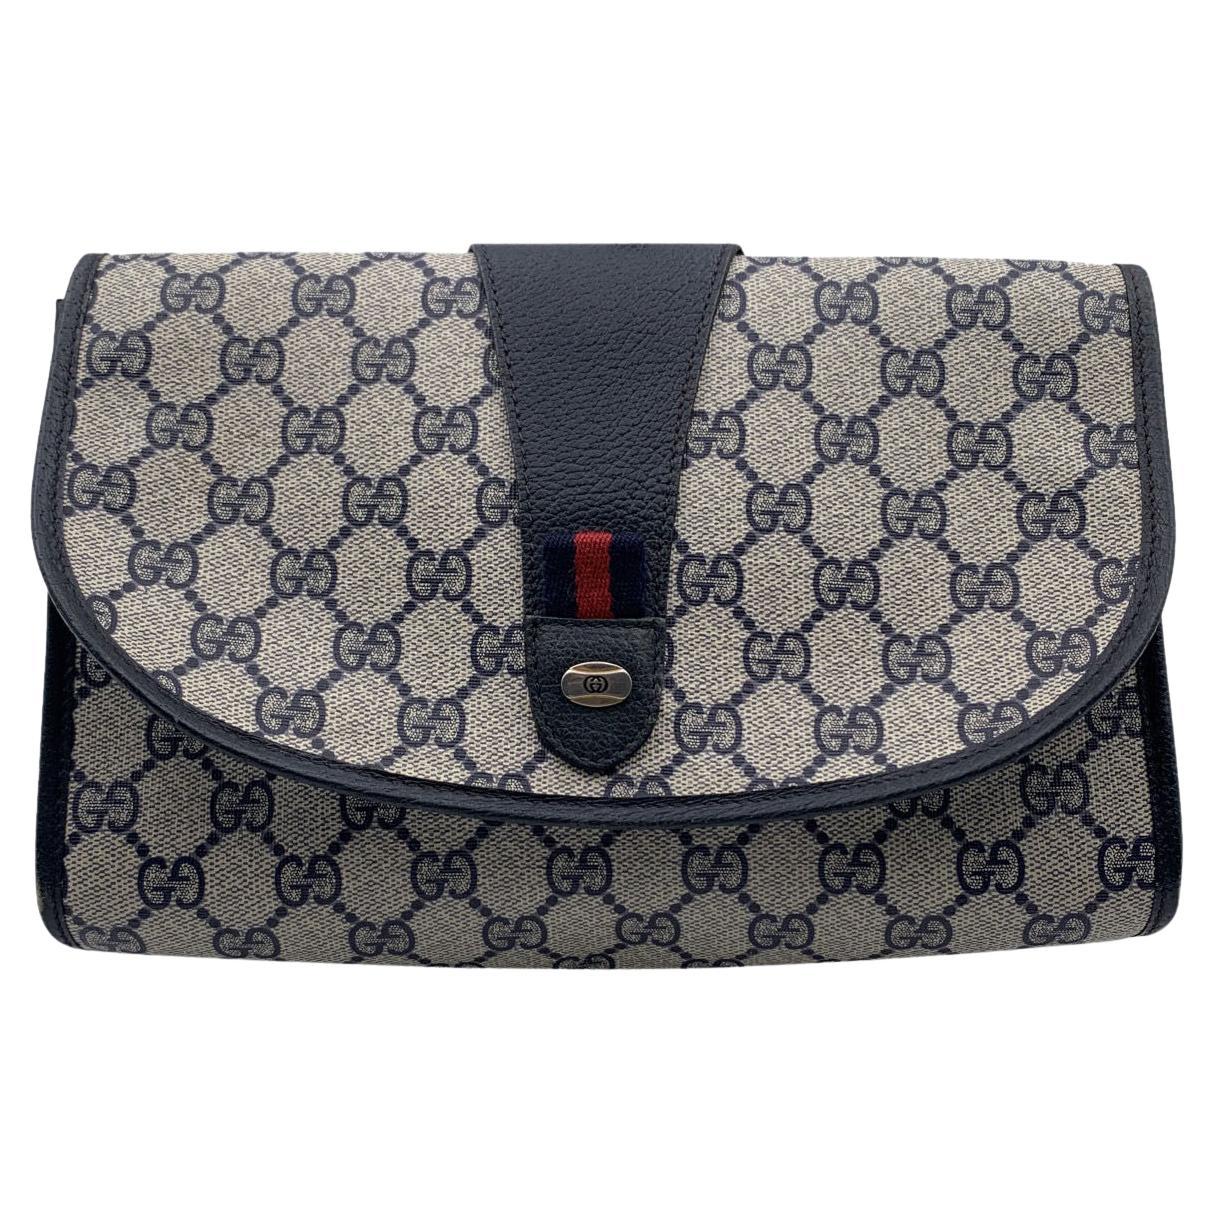 Gucci Vintage Blue Monogram Canvas Flap Clutch Bag Handbag